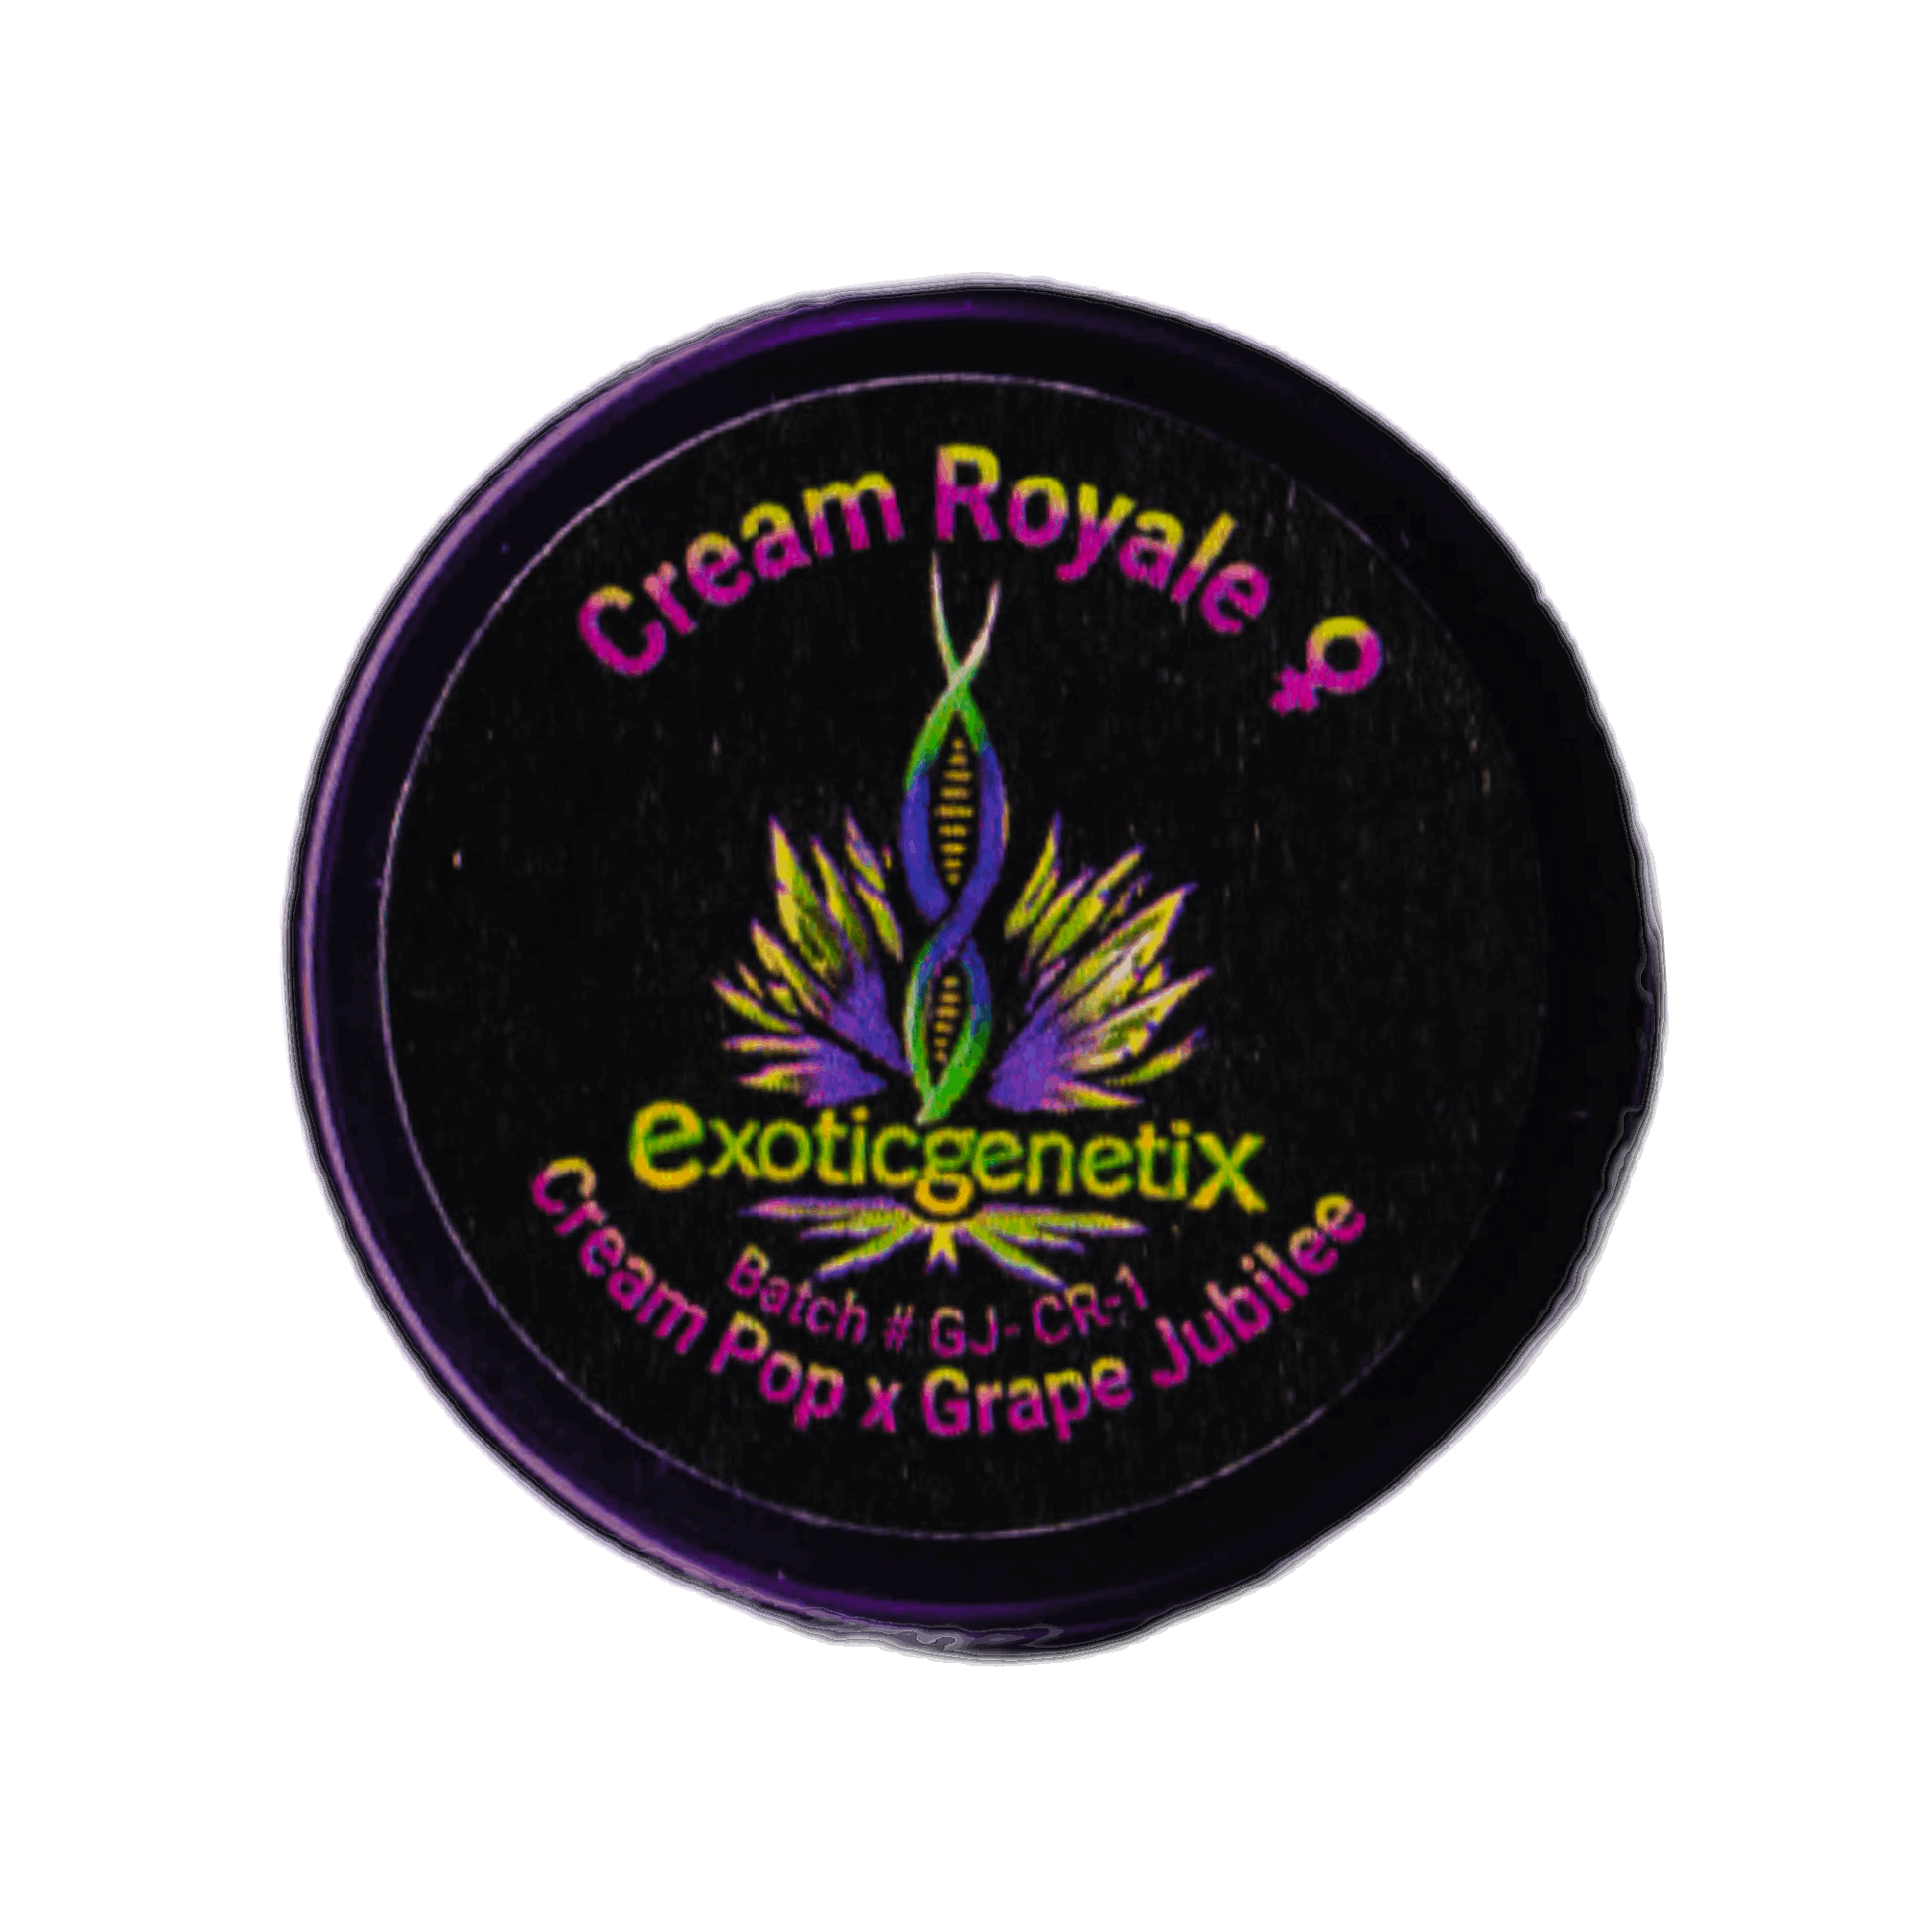 CREAM ROYALE Cream Pop x Grape Jubilee Exotic Genetix